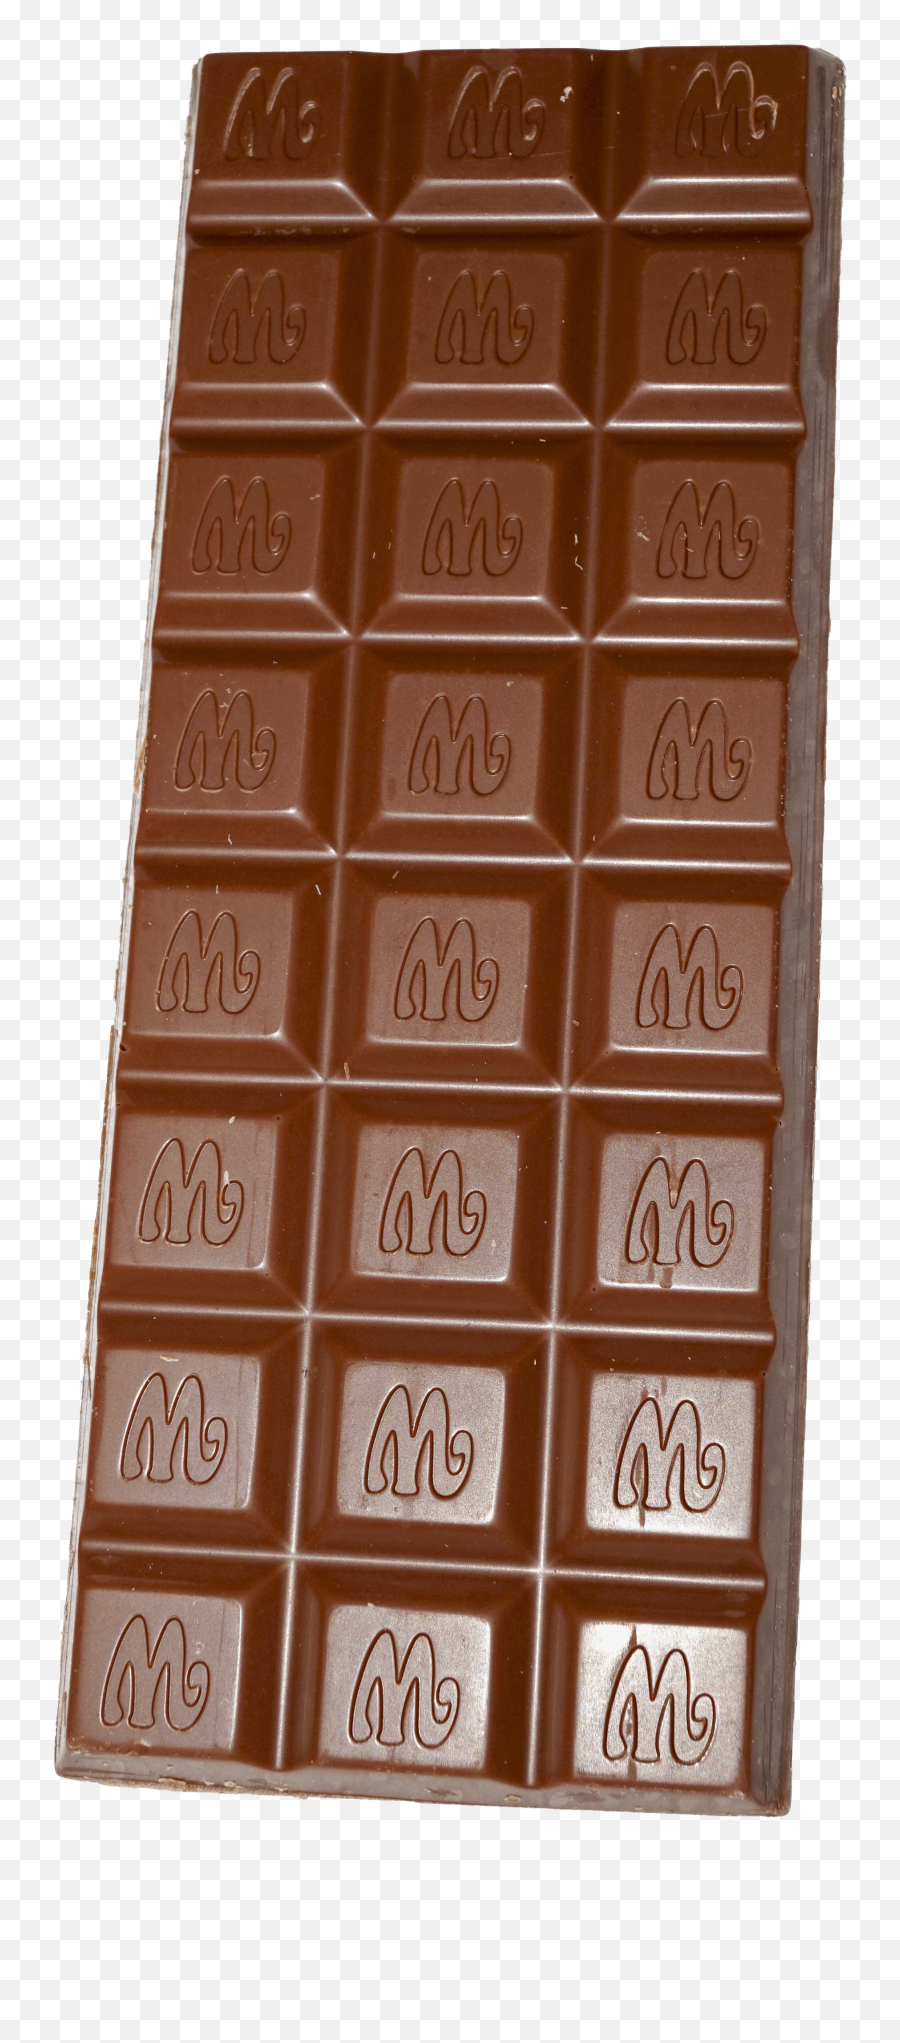 Marabou Chocolate - Marabou Chocolate Open Emoji,Chocolate Png